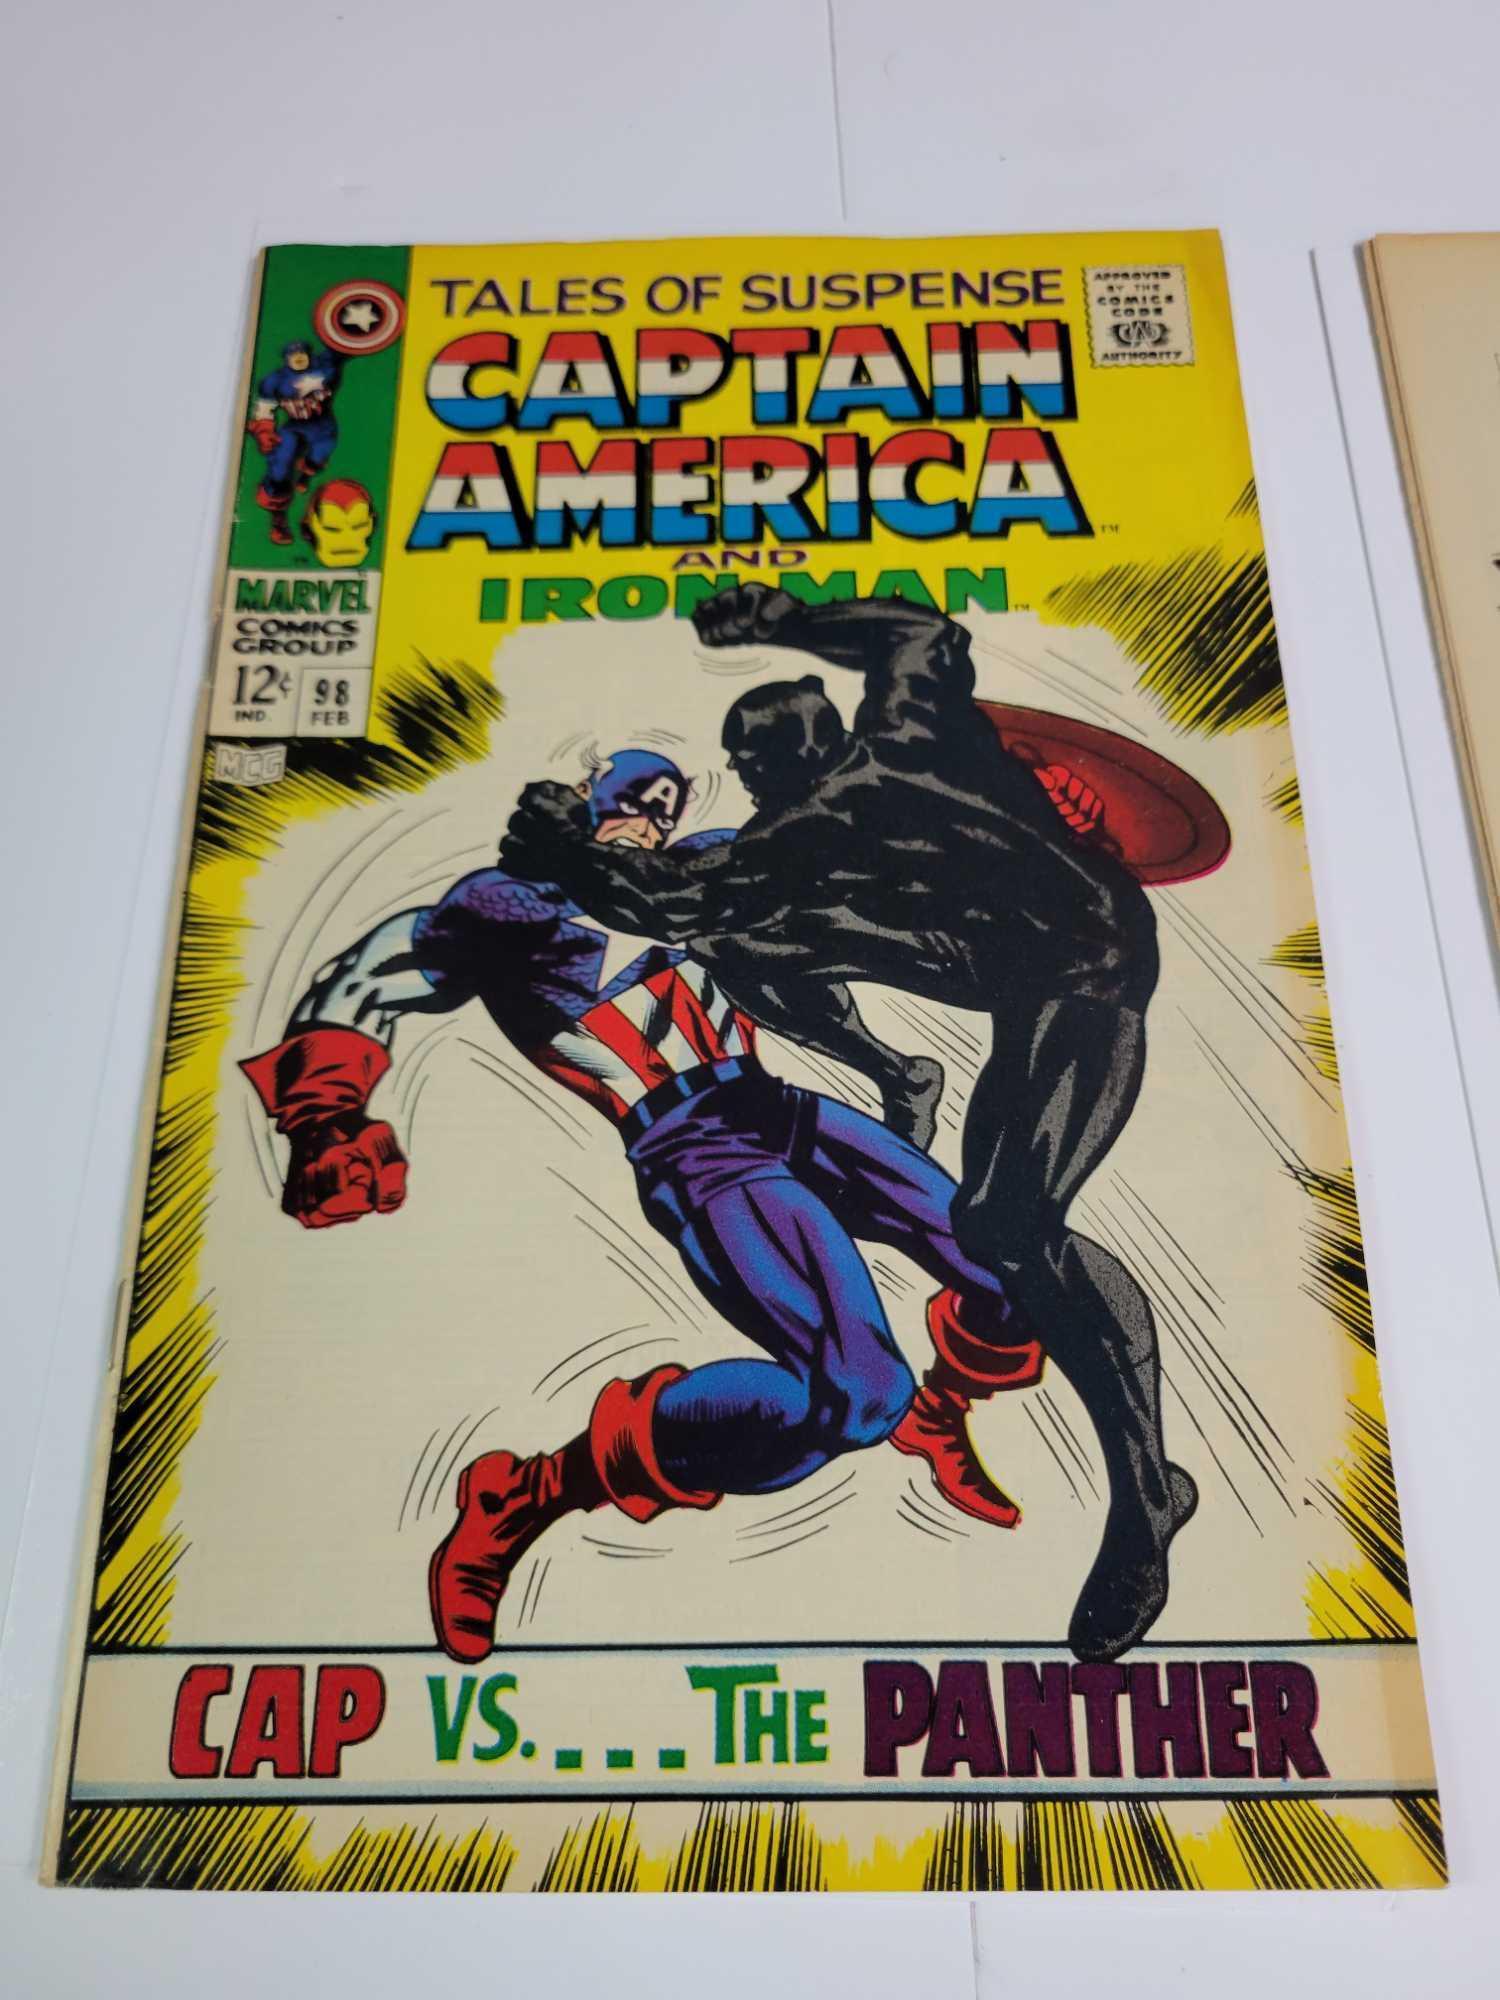 Marvel Captain America 12c #98, 100, 101 issues